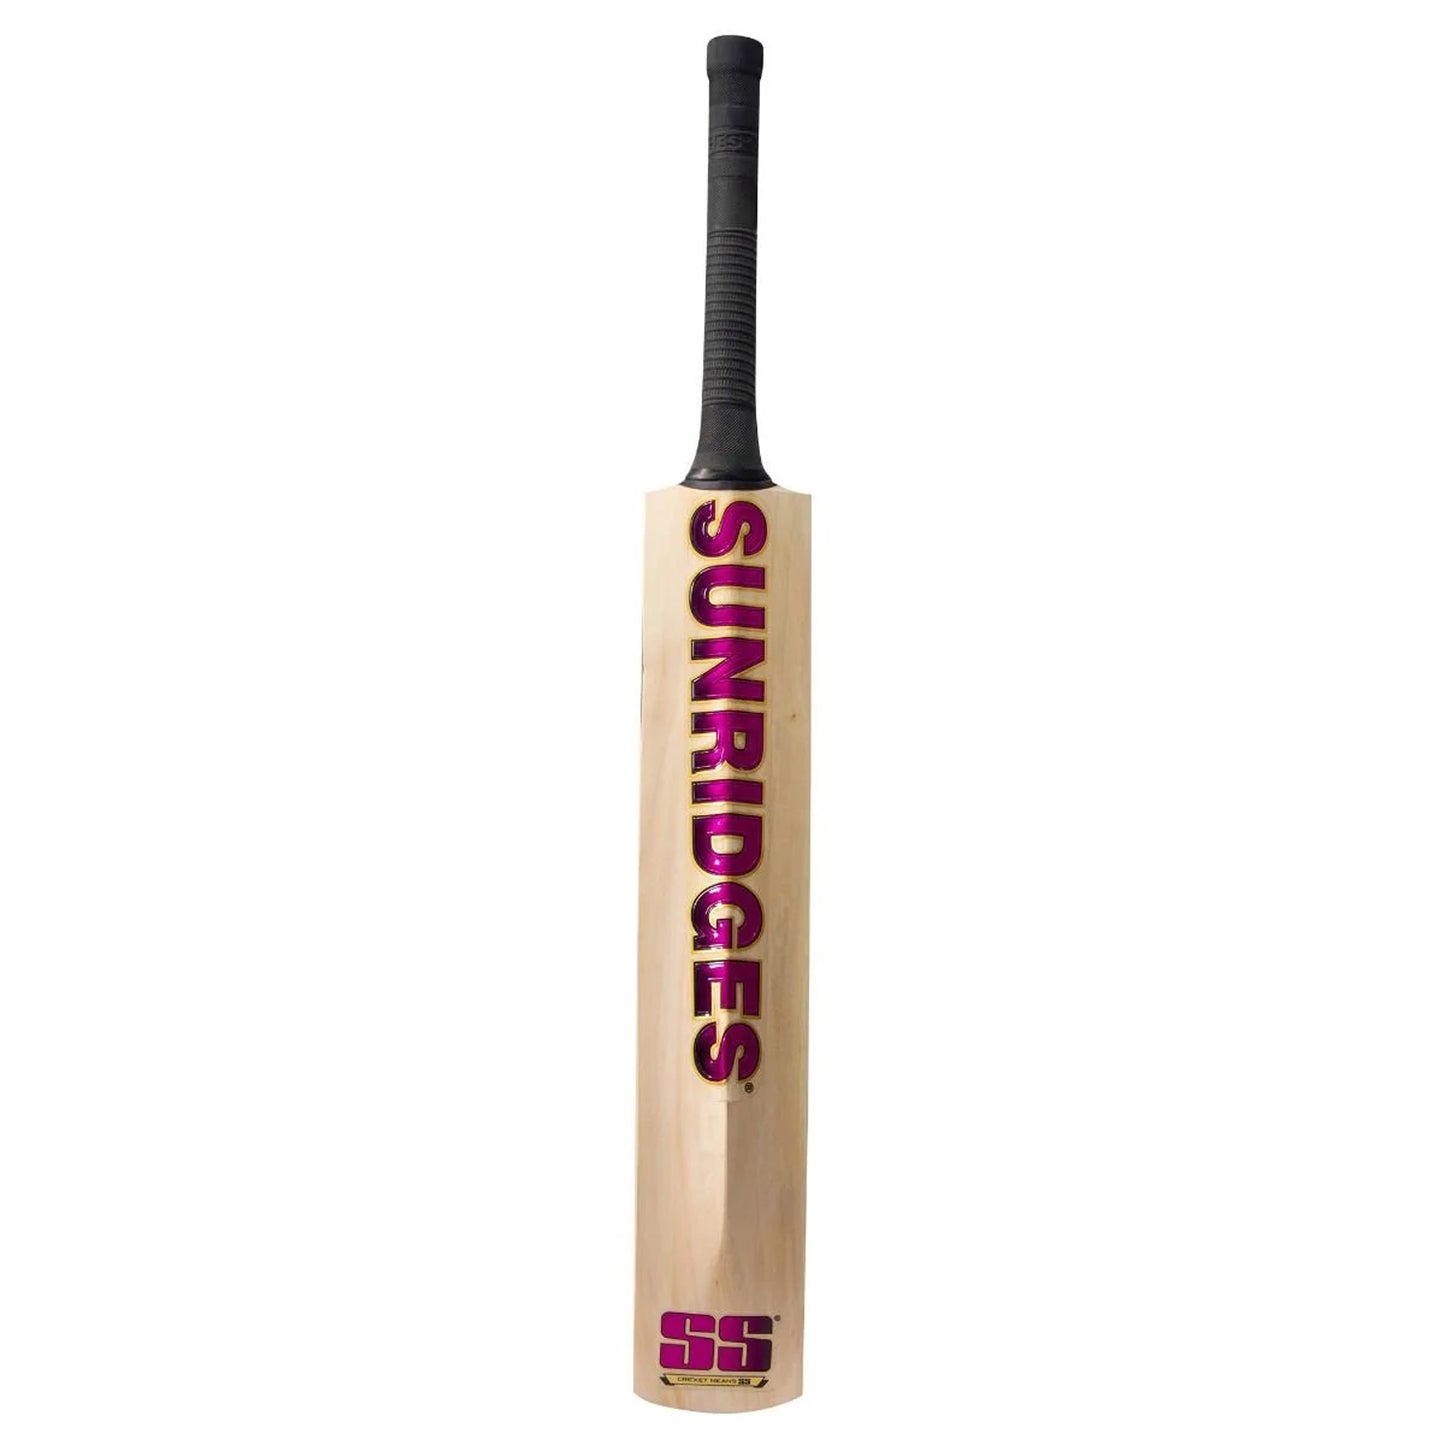 SS VA-900 Solitaire Retro Classic Kashmir Willow Cricket Bat - Best Price online Prokicksports.com